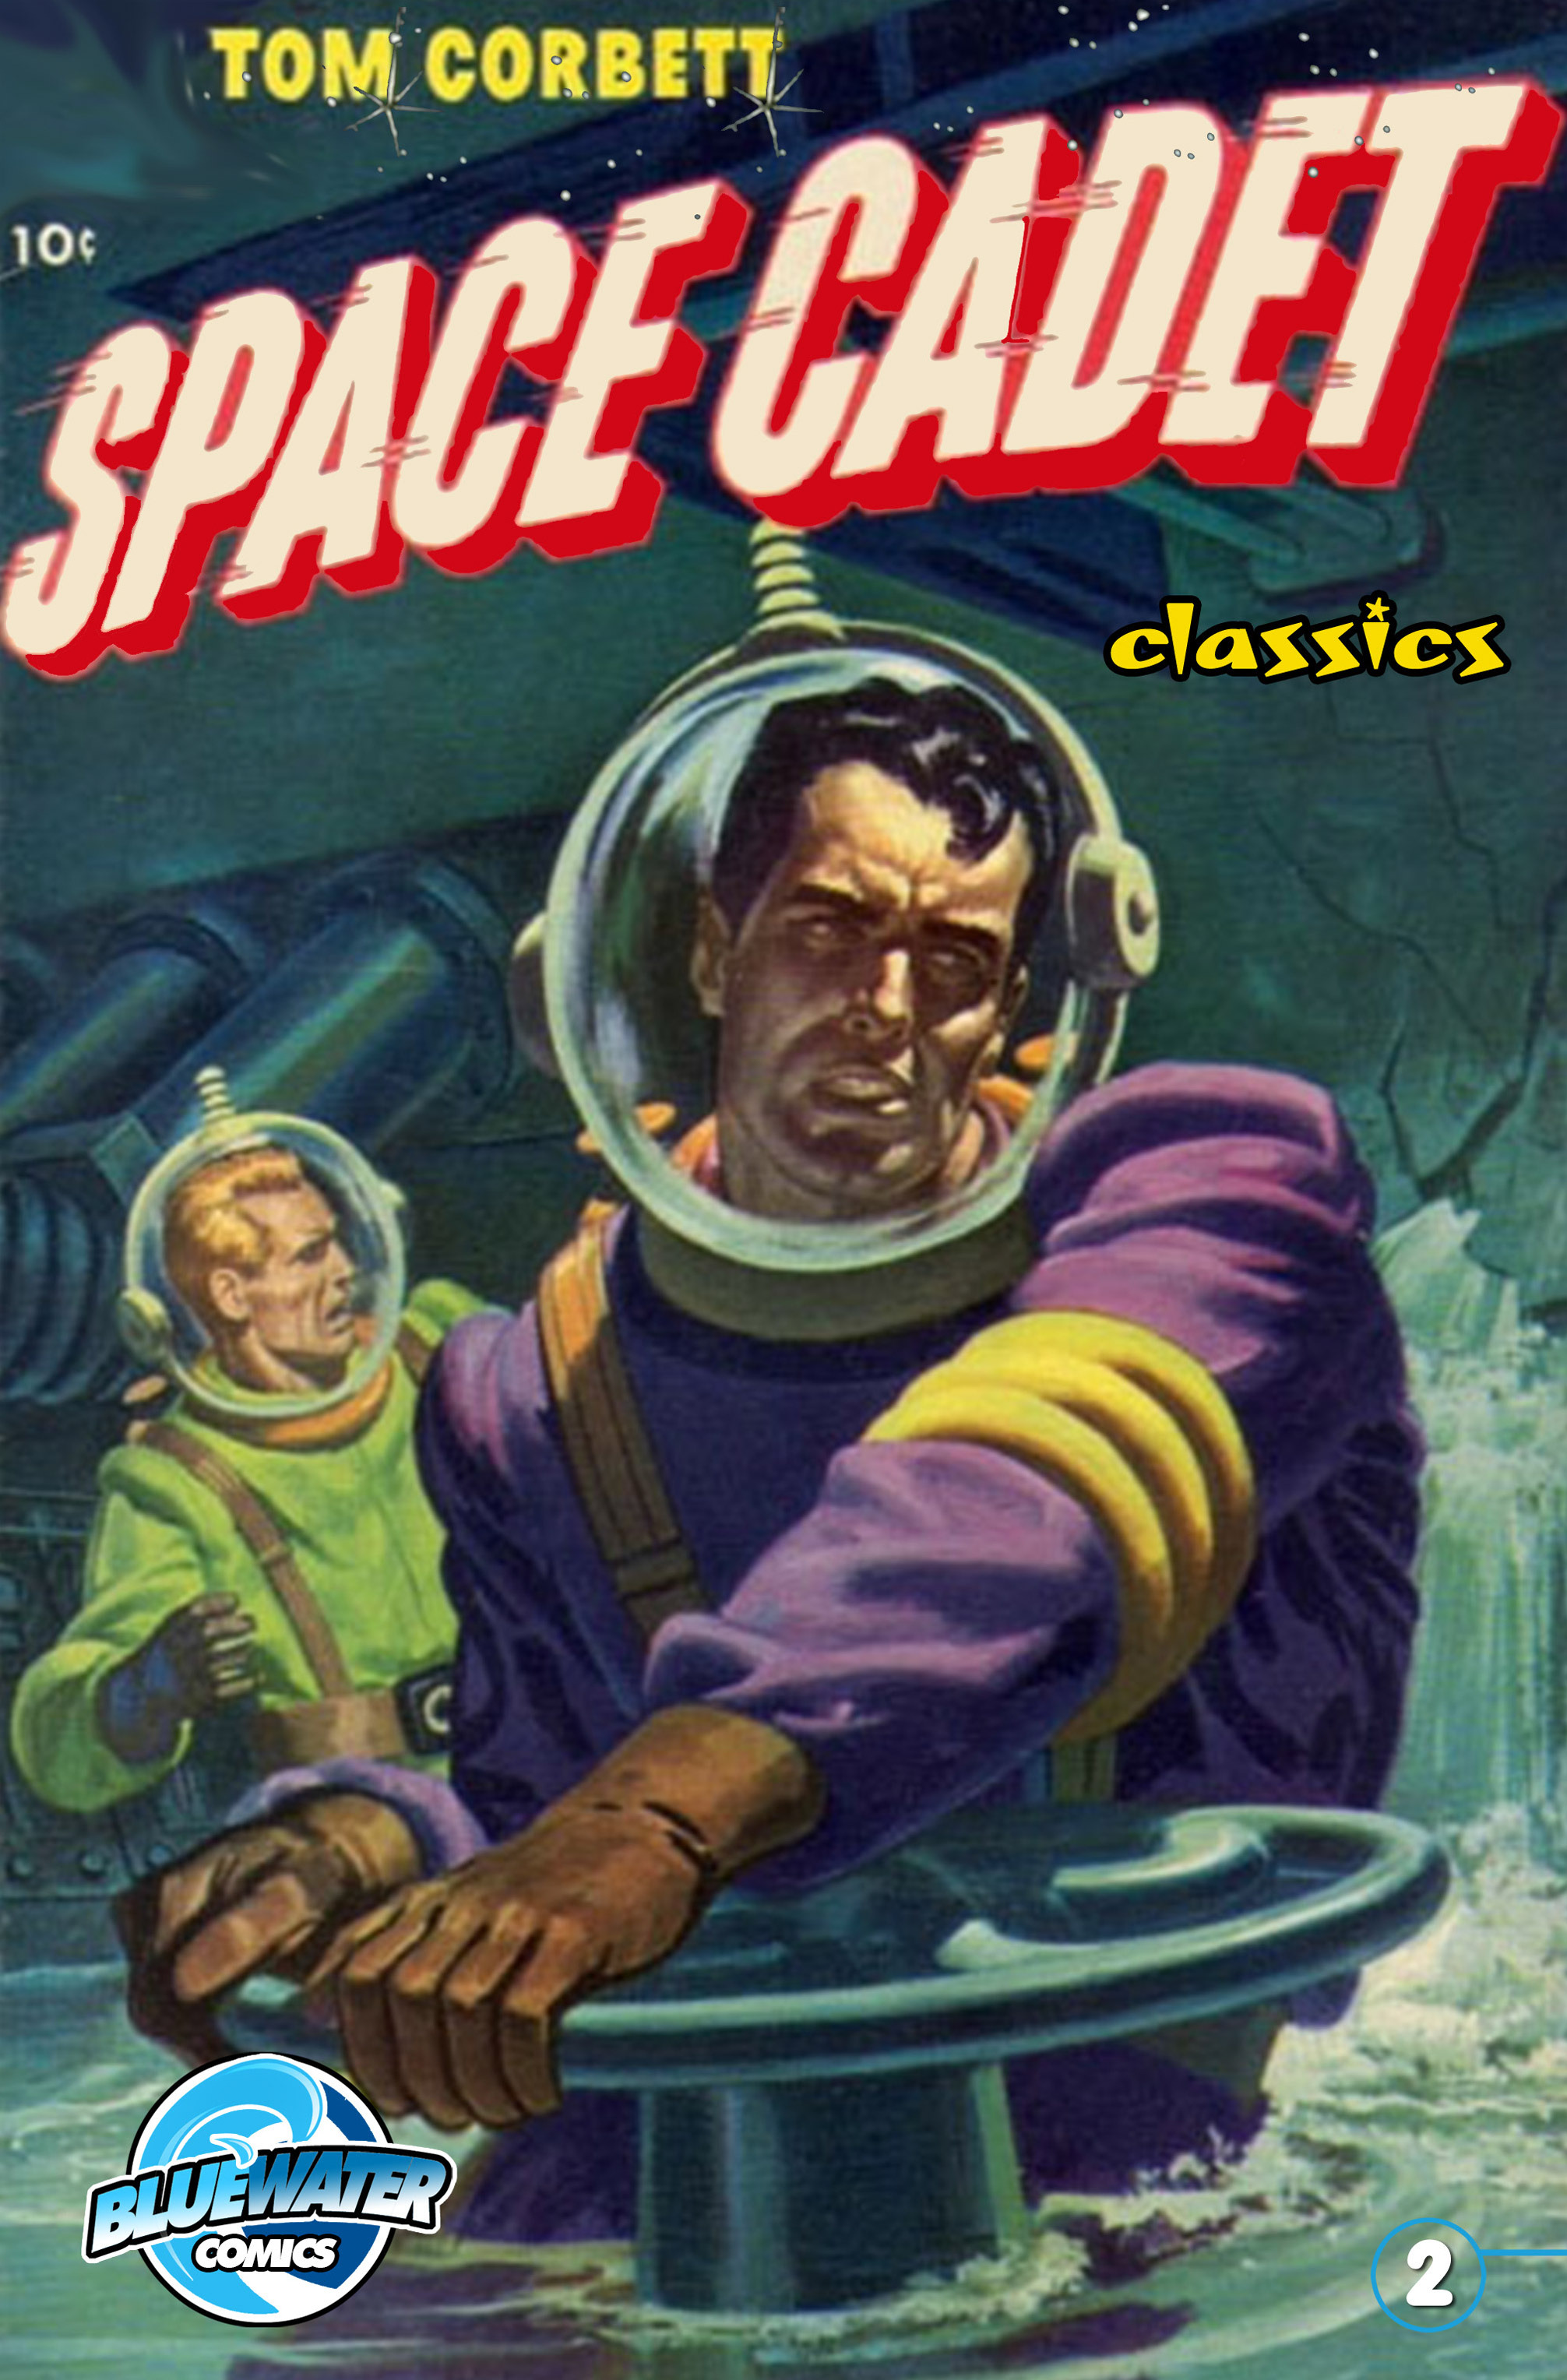 Read online Tom Corbett: Space Cadet Classics comic -  Issue #2 - 1